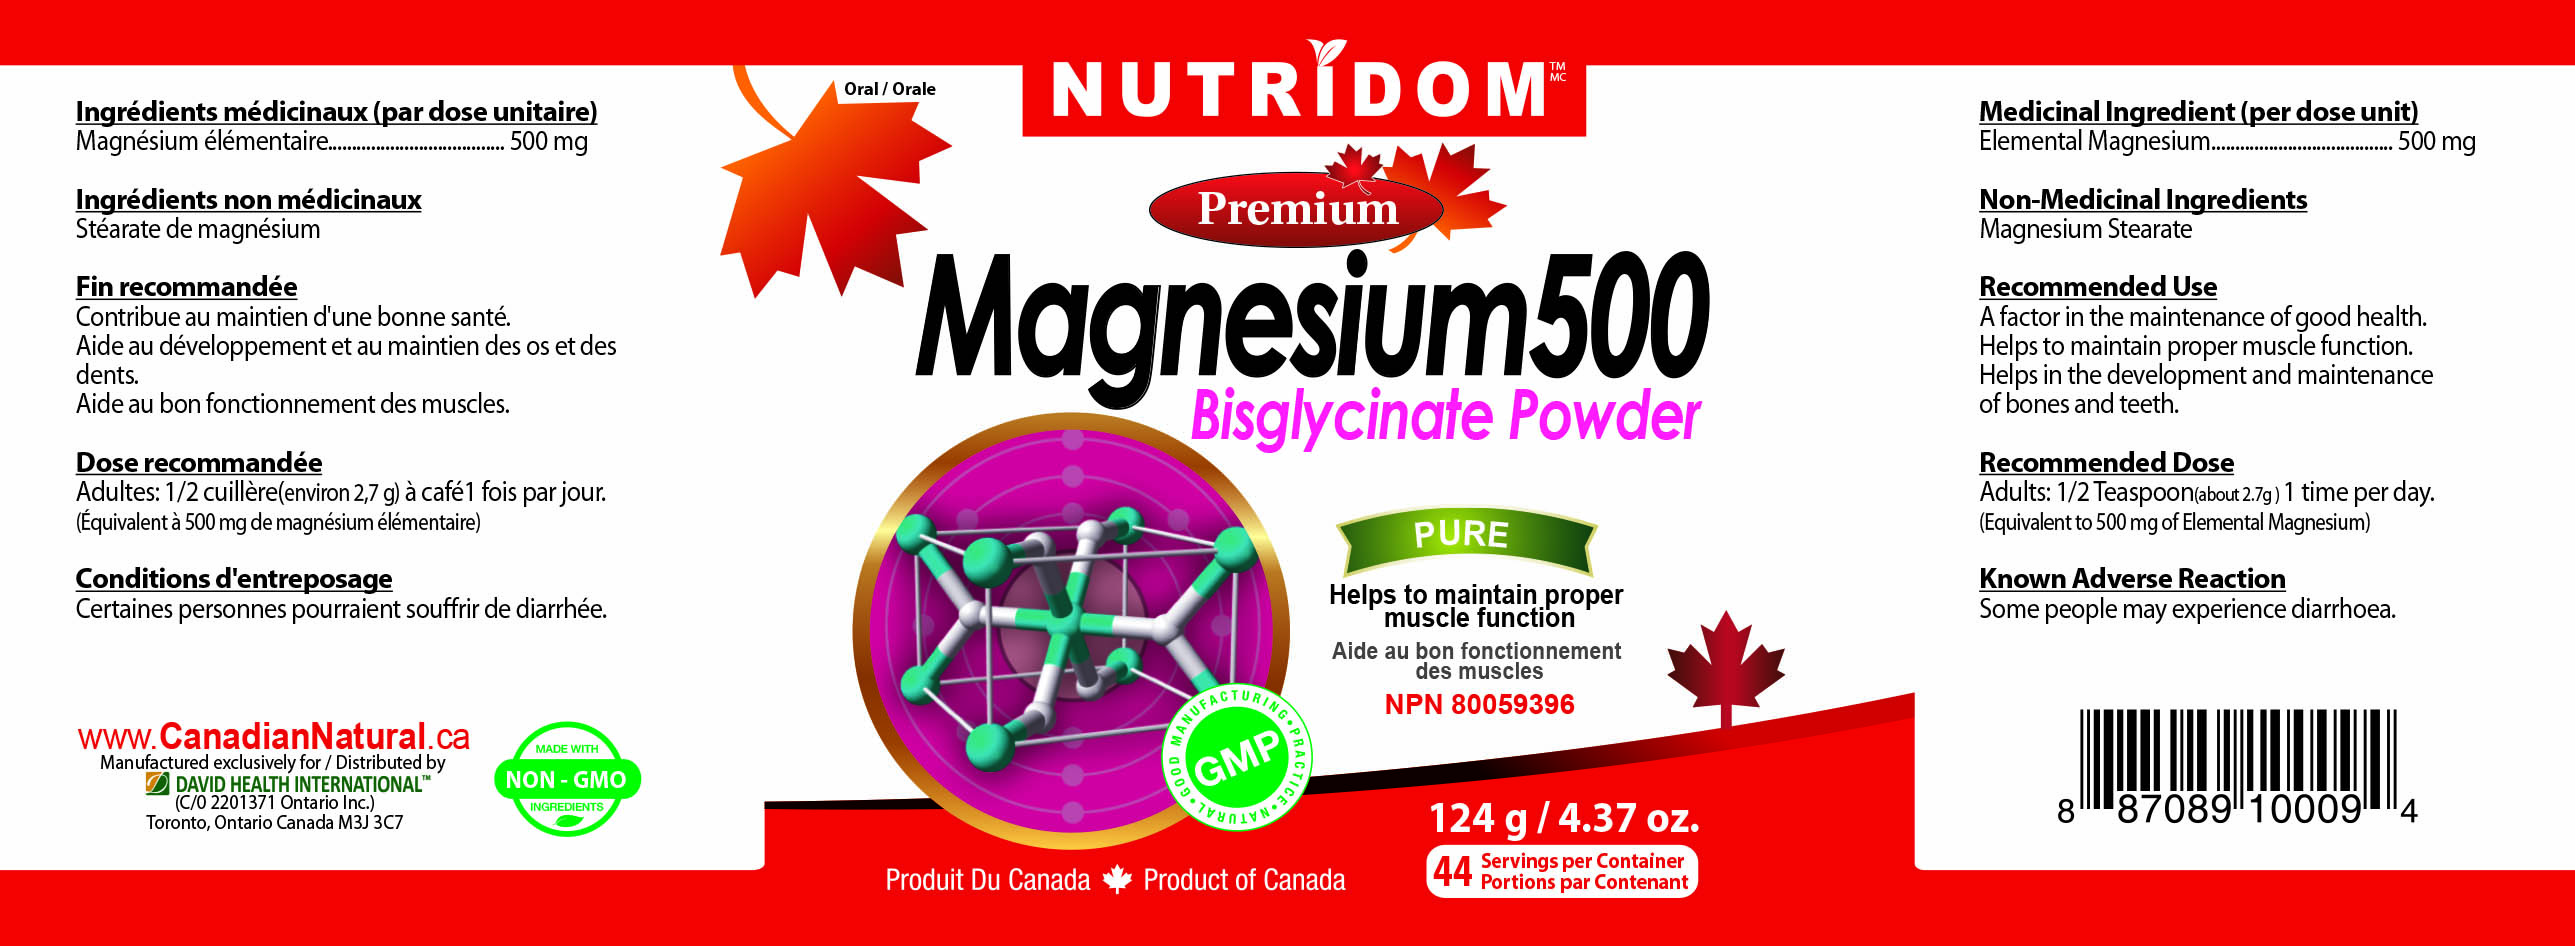 NUTRIDOM MAGNESIUM BISGLYCINATE 500 POWDER